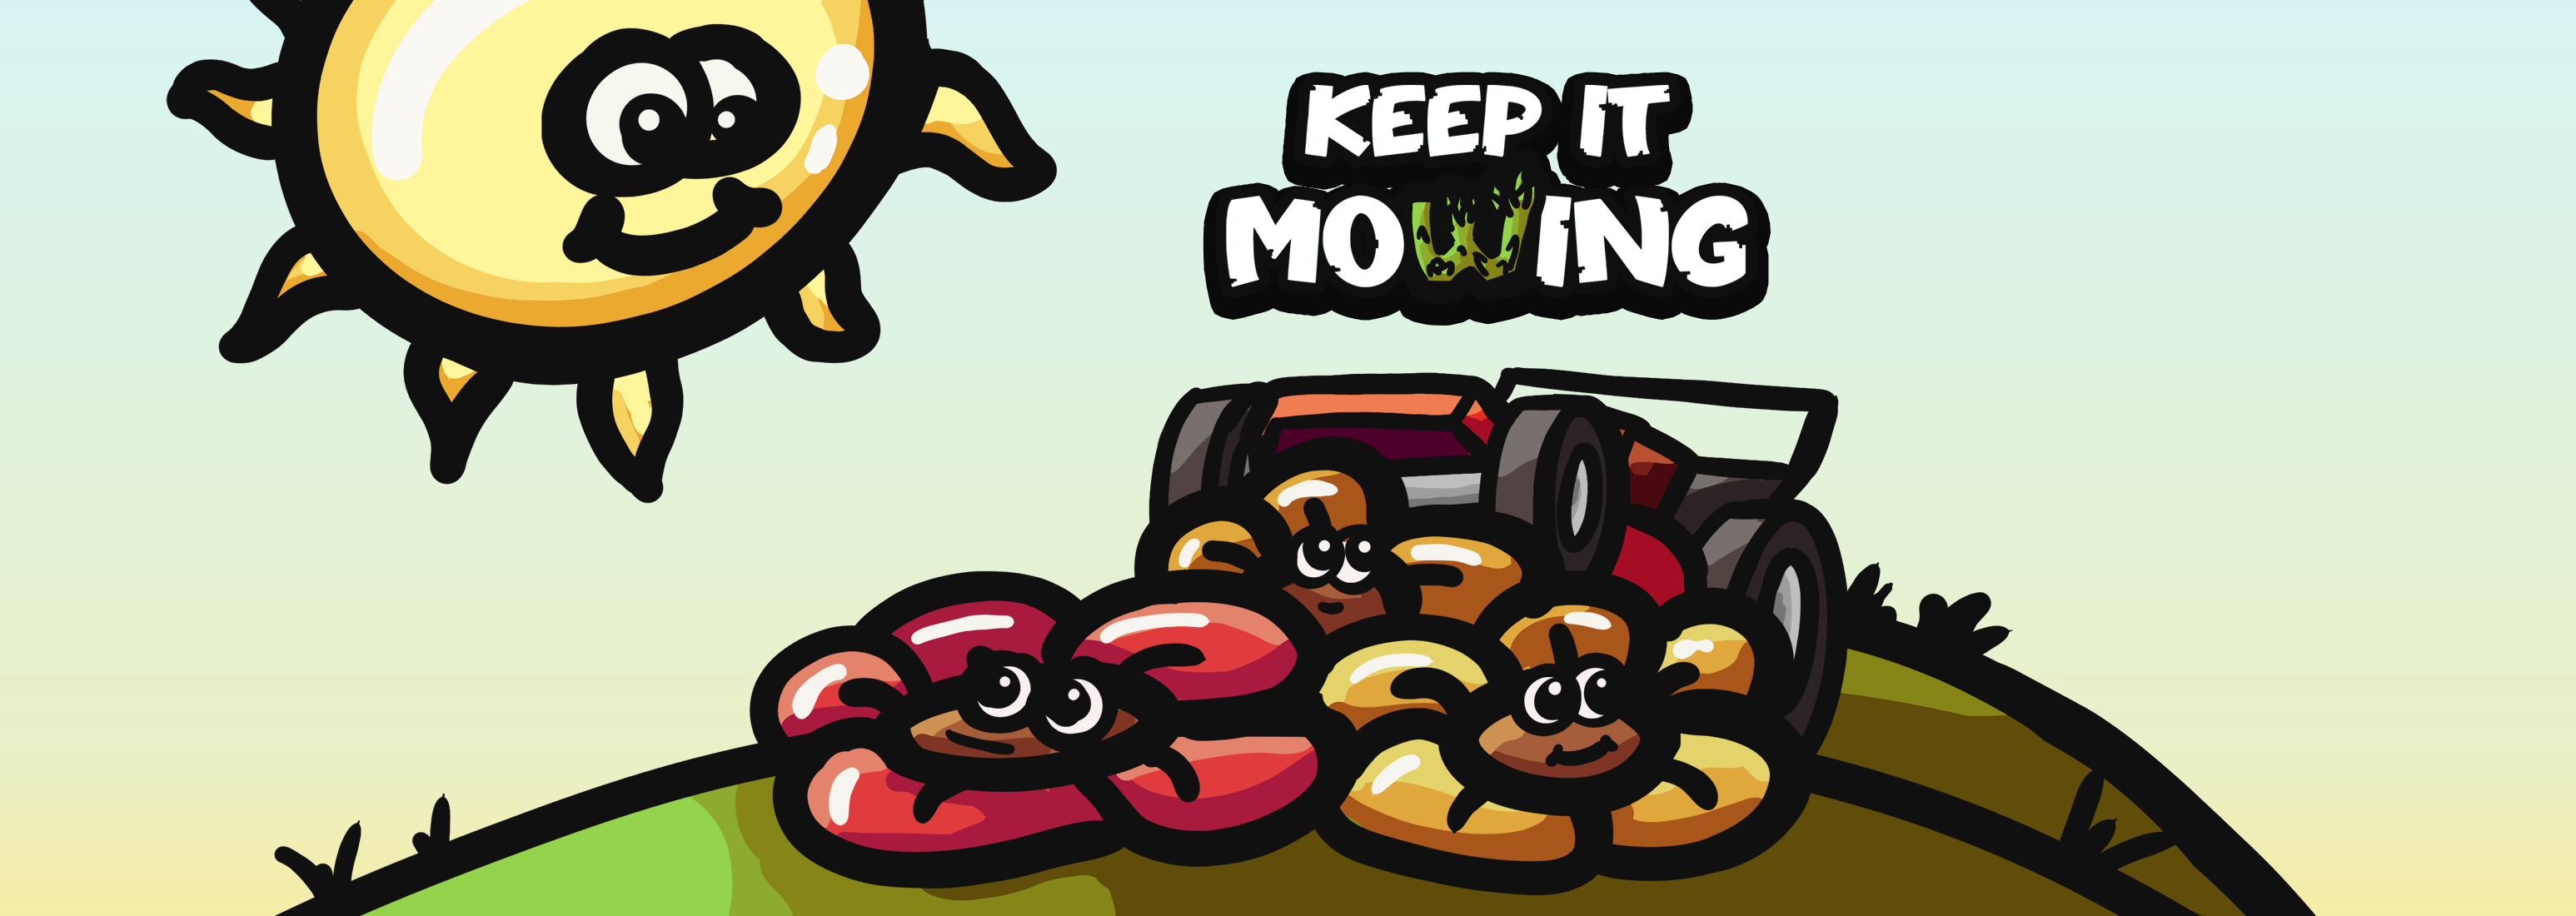 Keep It Mowing!